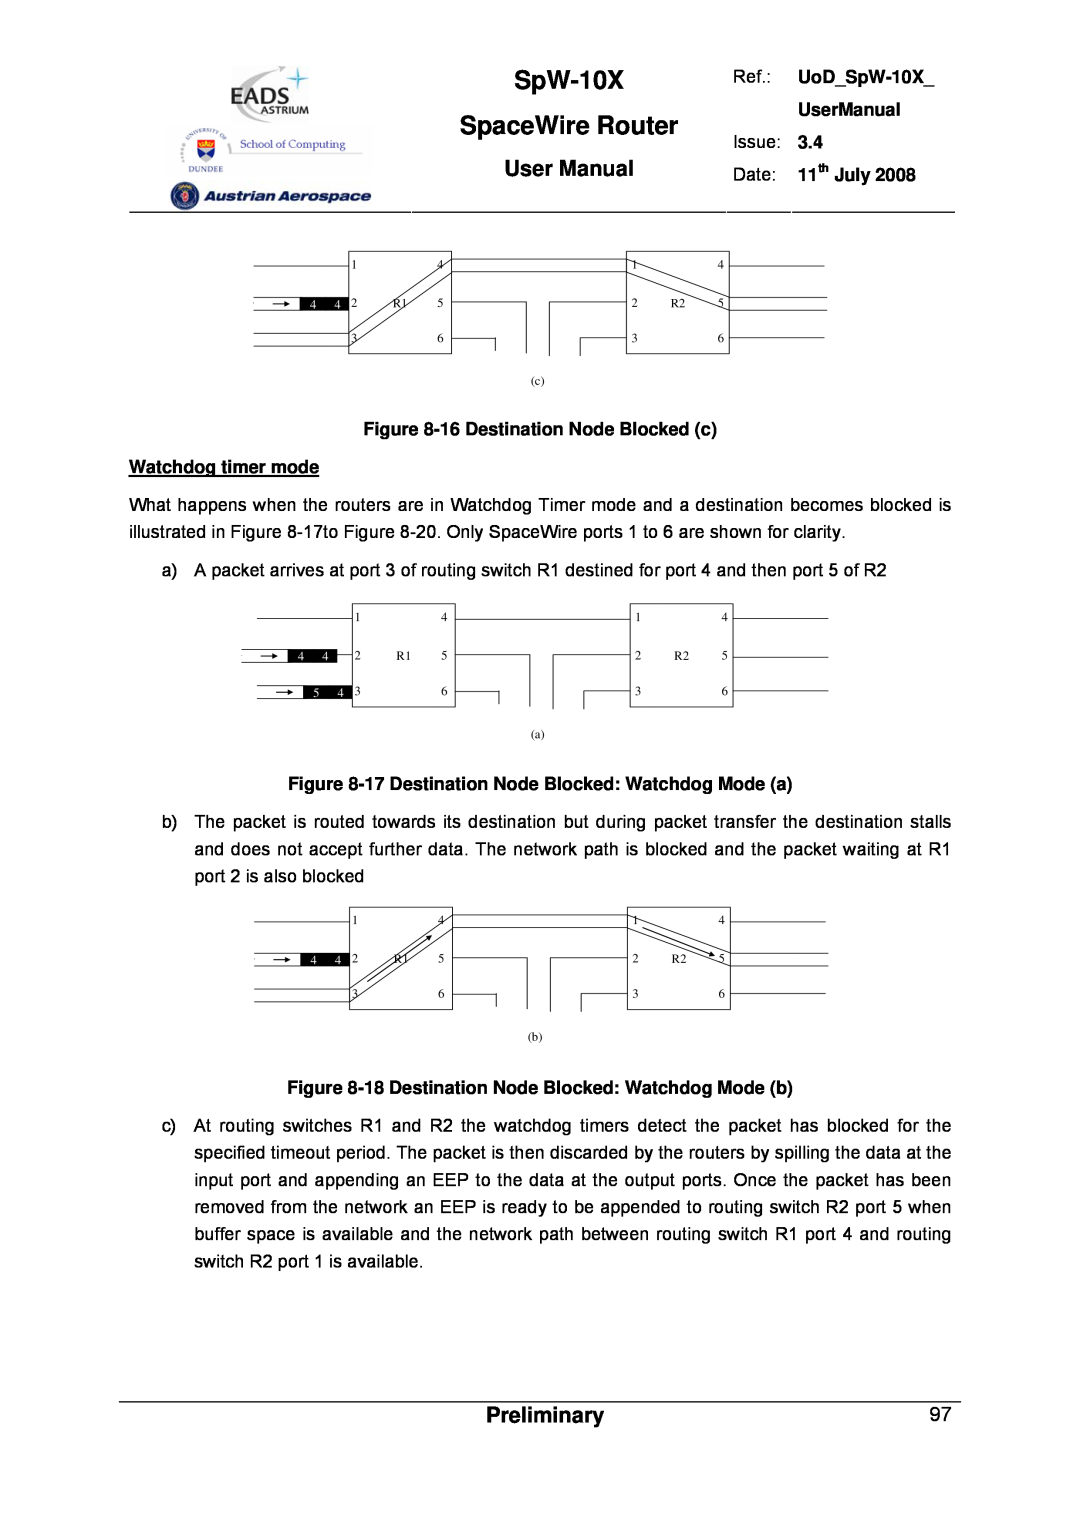 Atmel SpW-10X user manual SpaceWire Router, User Manual, Preliminary 